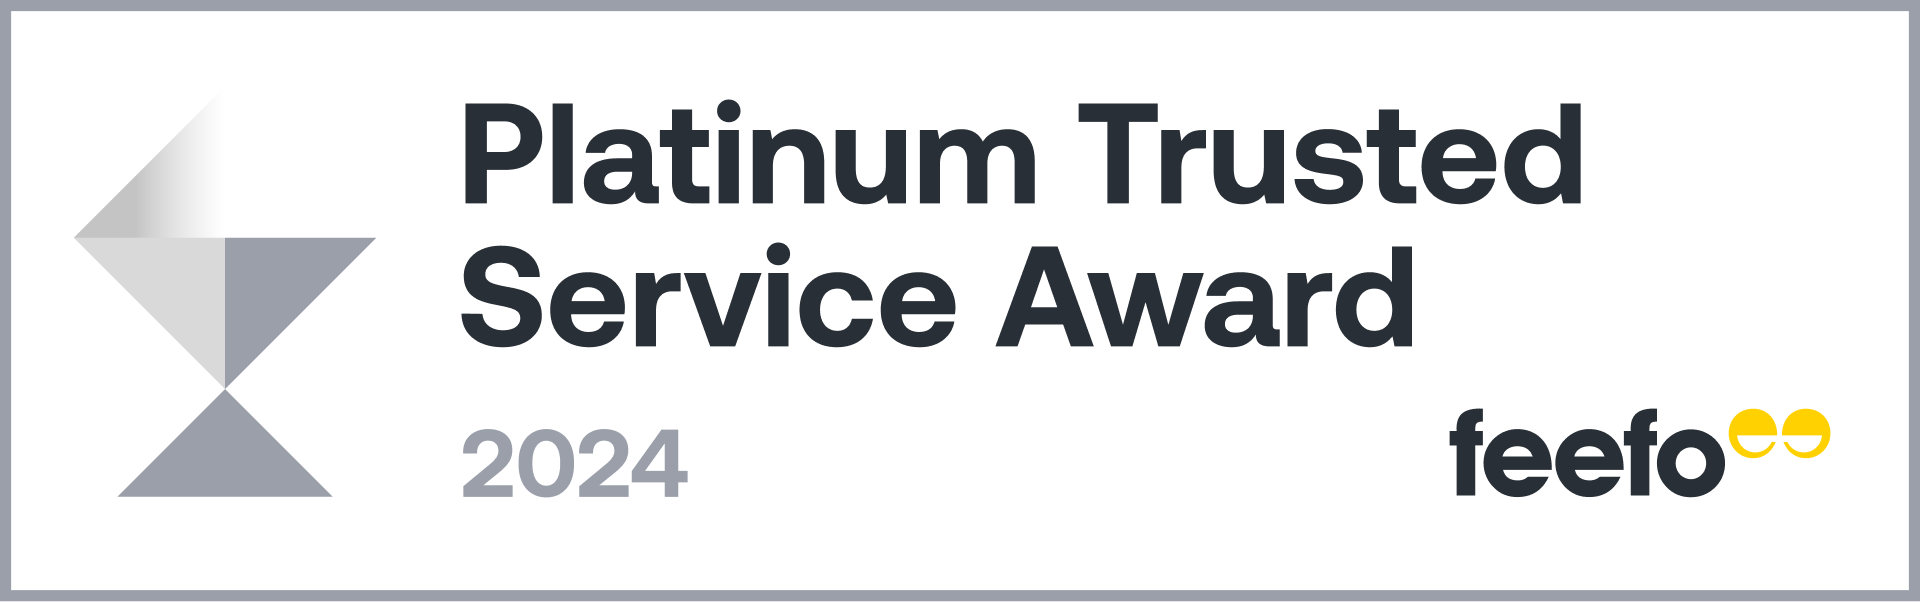 Feefo Platinium Trusted Service Award 2022